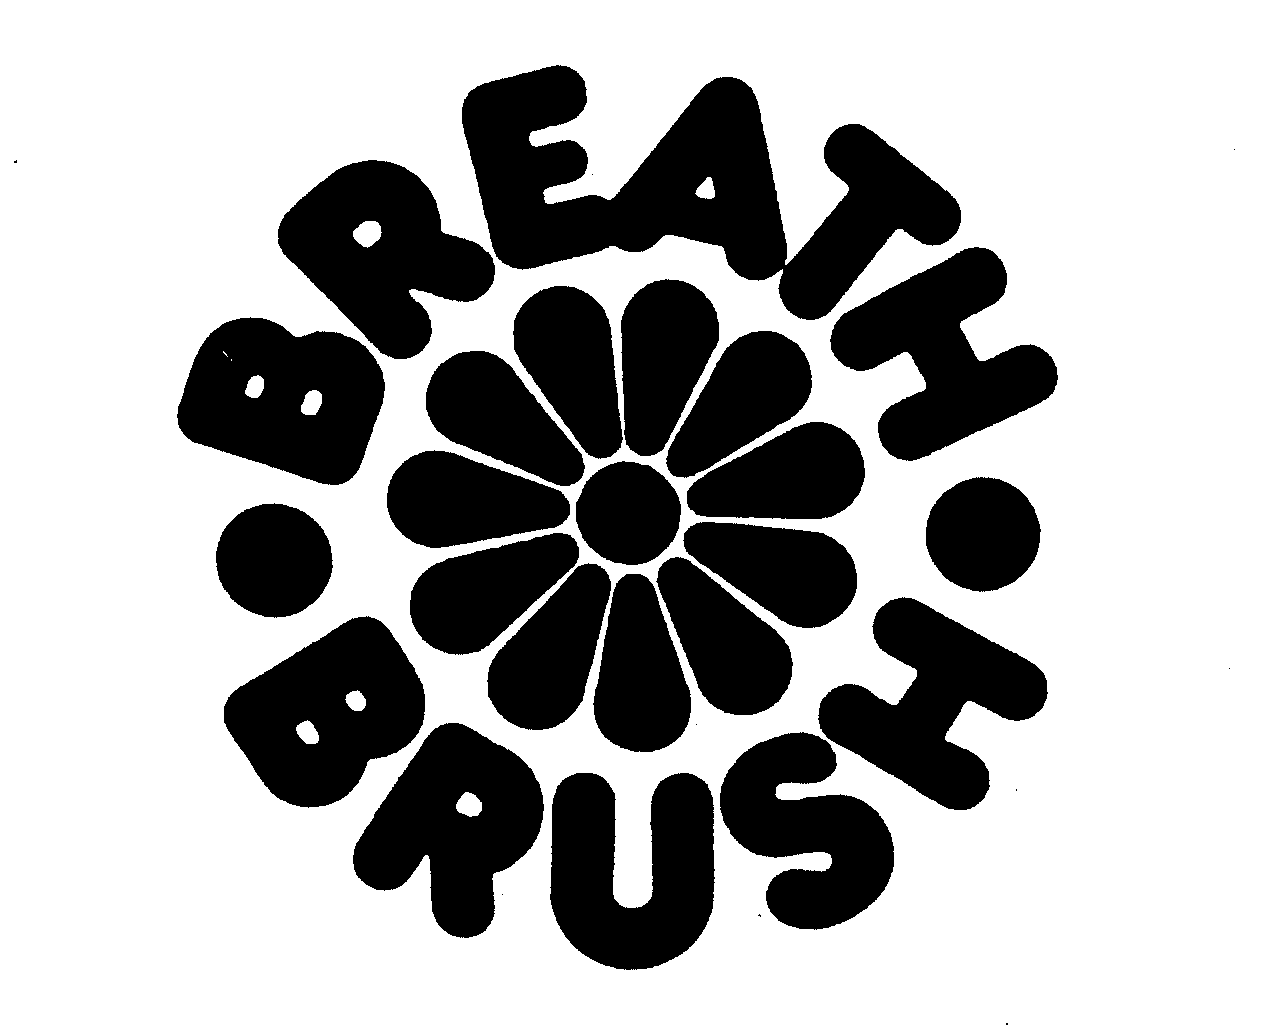 Trademark Logo BREATH BRUSH